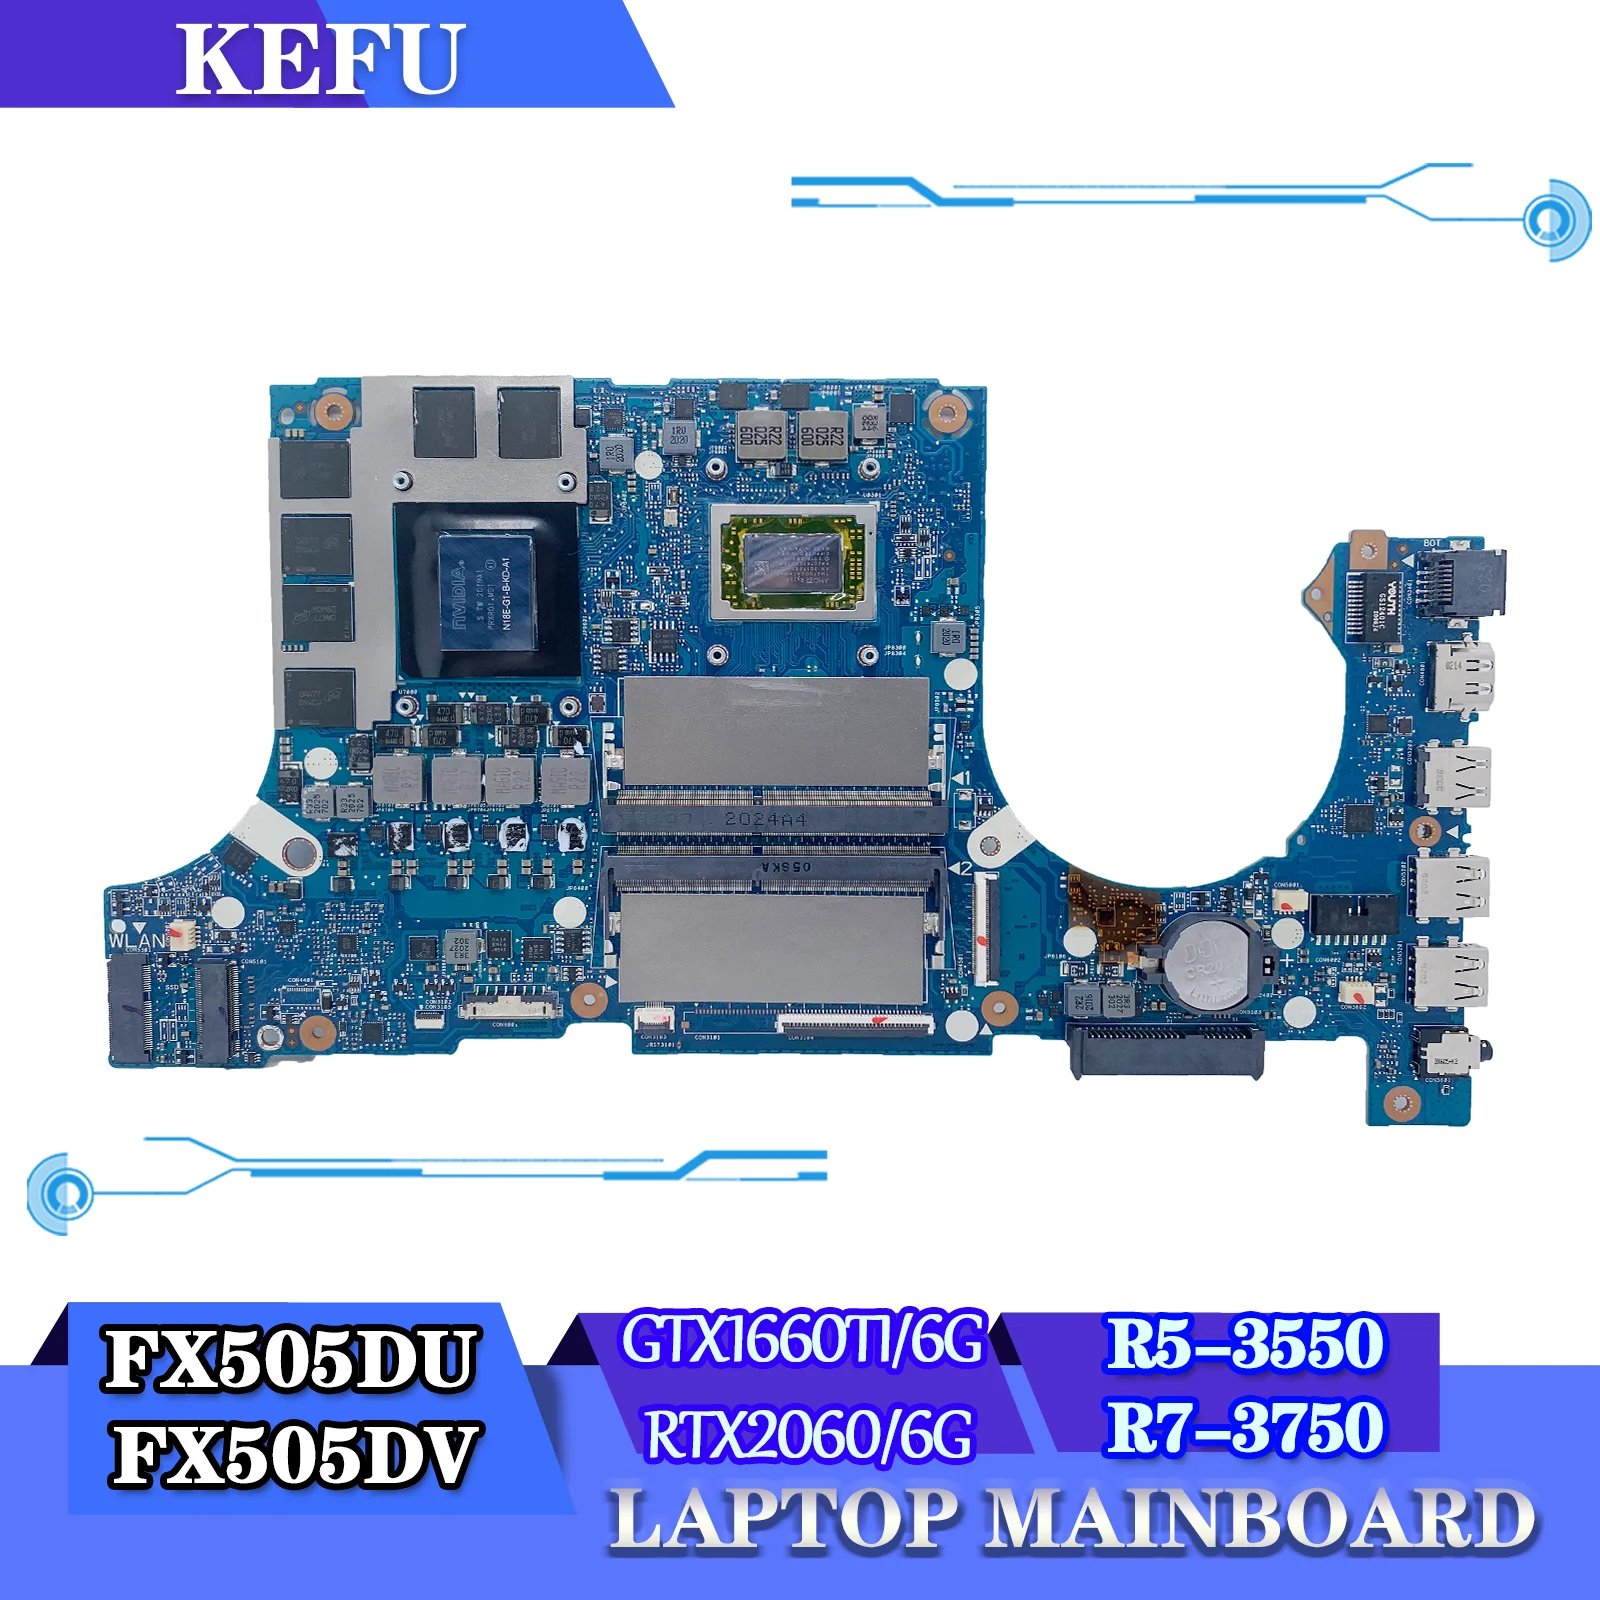 

Notebook FX505D Mainboard For ASUS FX505DU FX505DV Laptop Motherboard AMD Ryzen R5-3550H R7-3750H RTX2060-6G GTX1660TI-6G